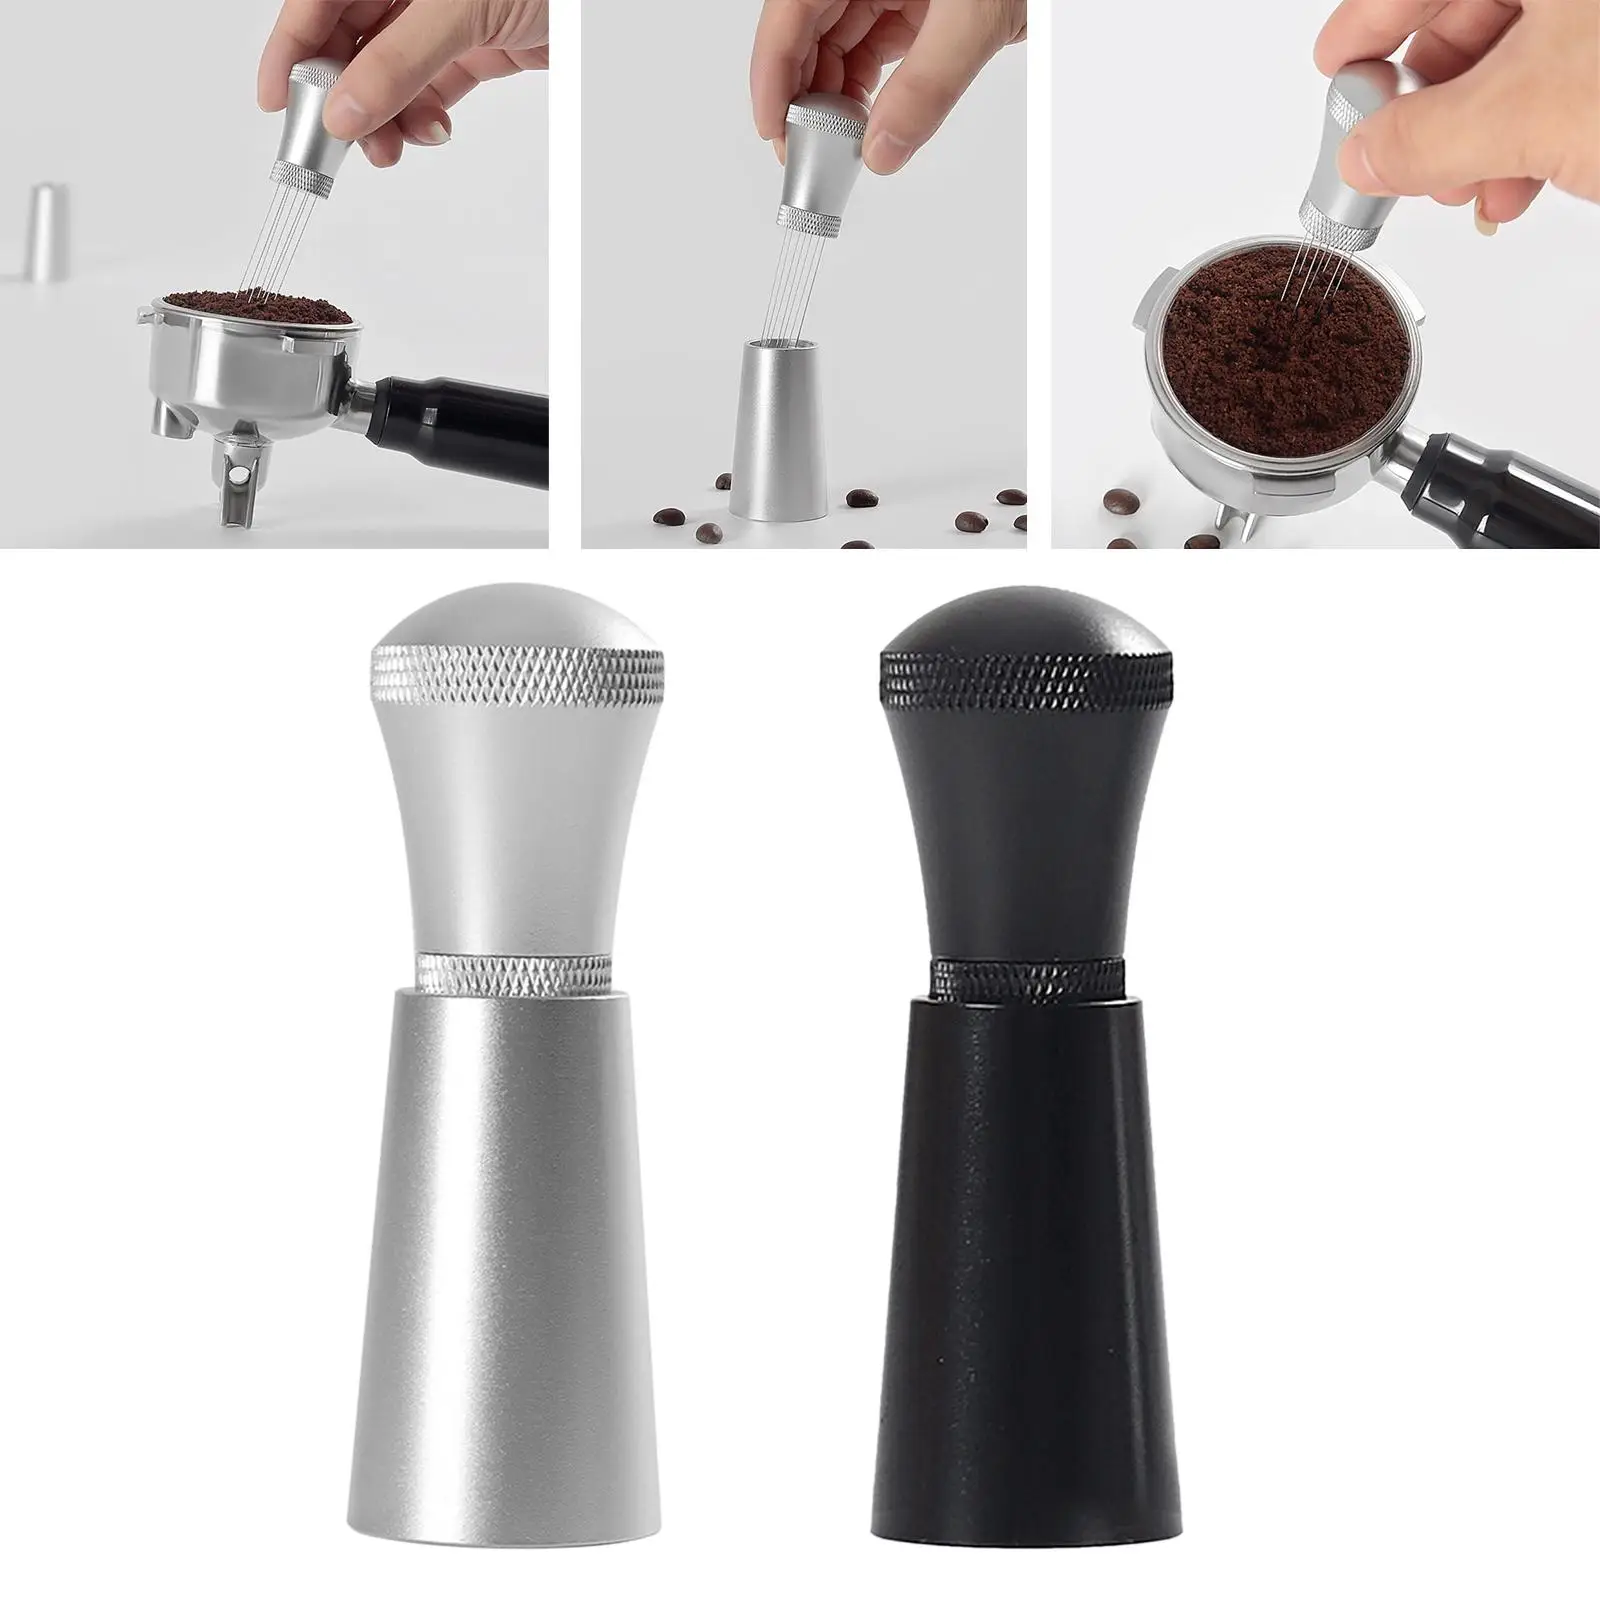 Coffee Stirrer Tool Barista Hand Distribution Tool Coffee Stirring Tamper